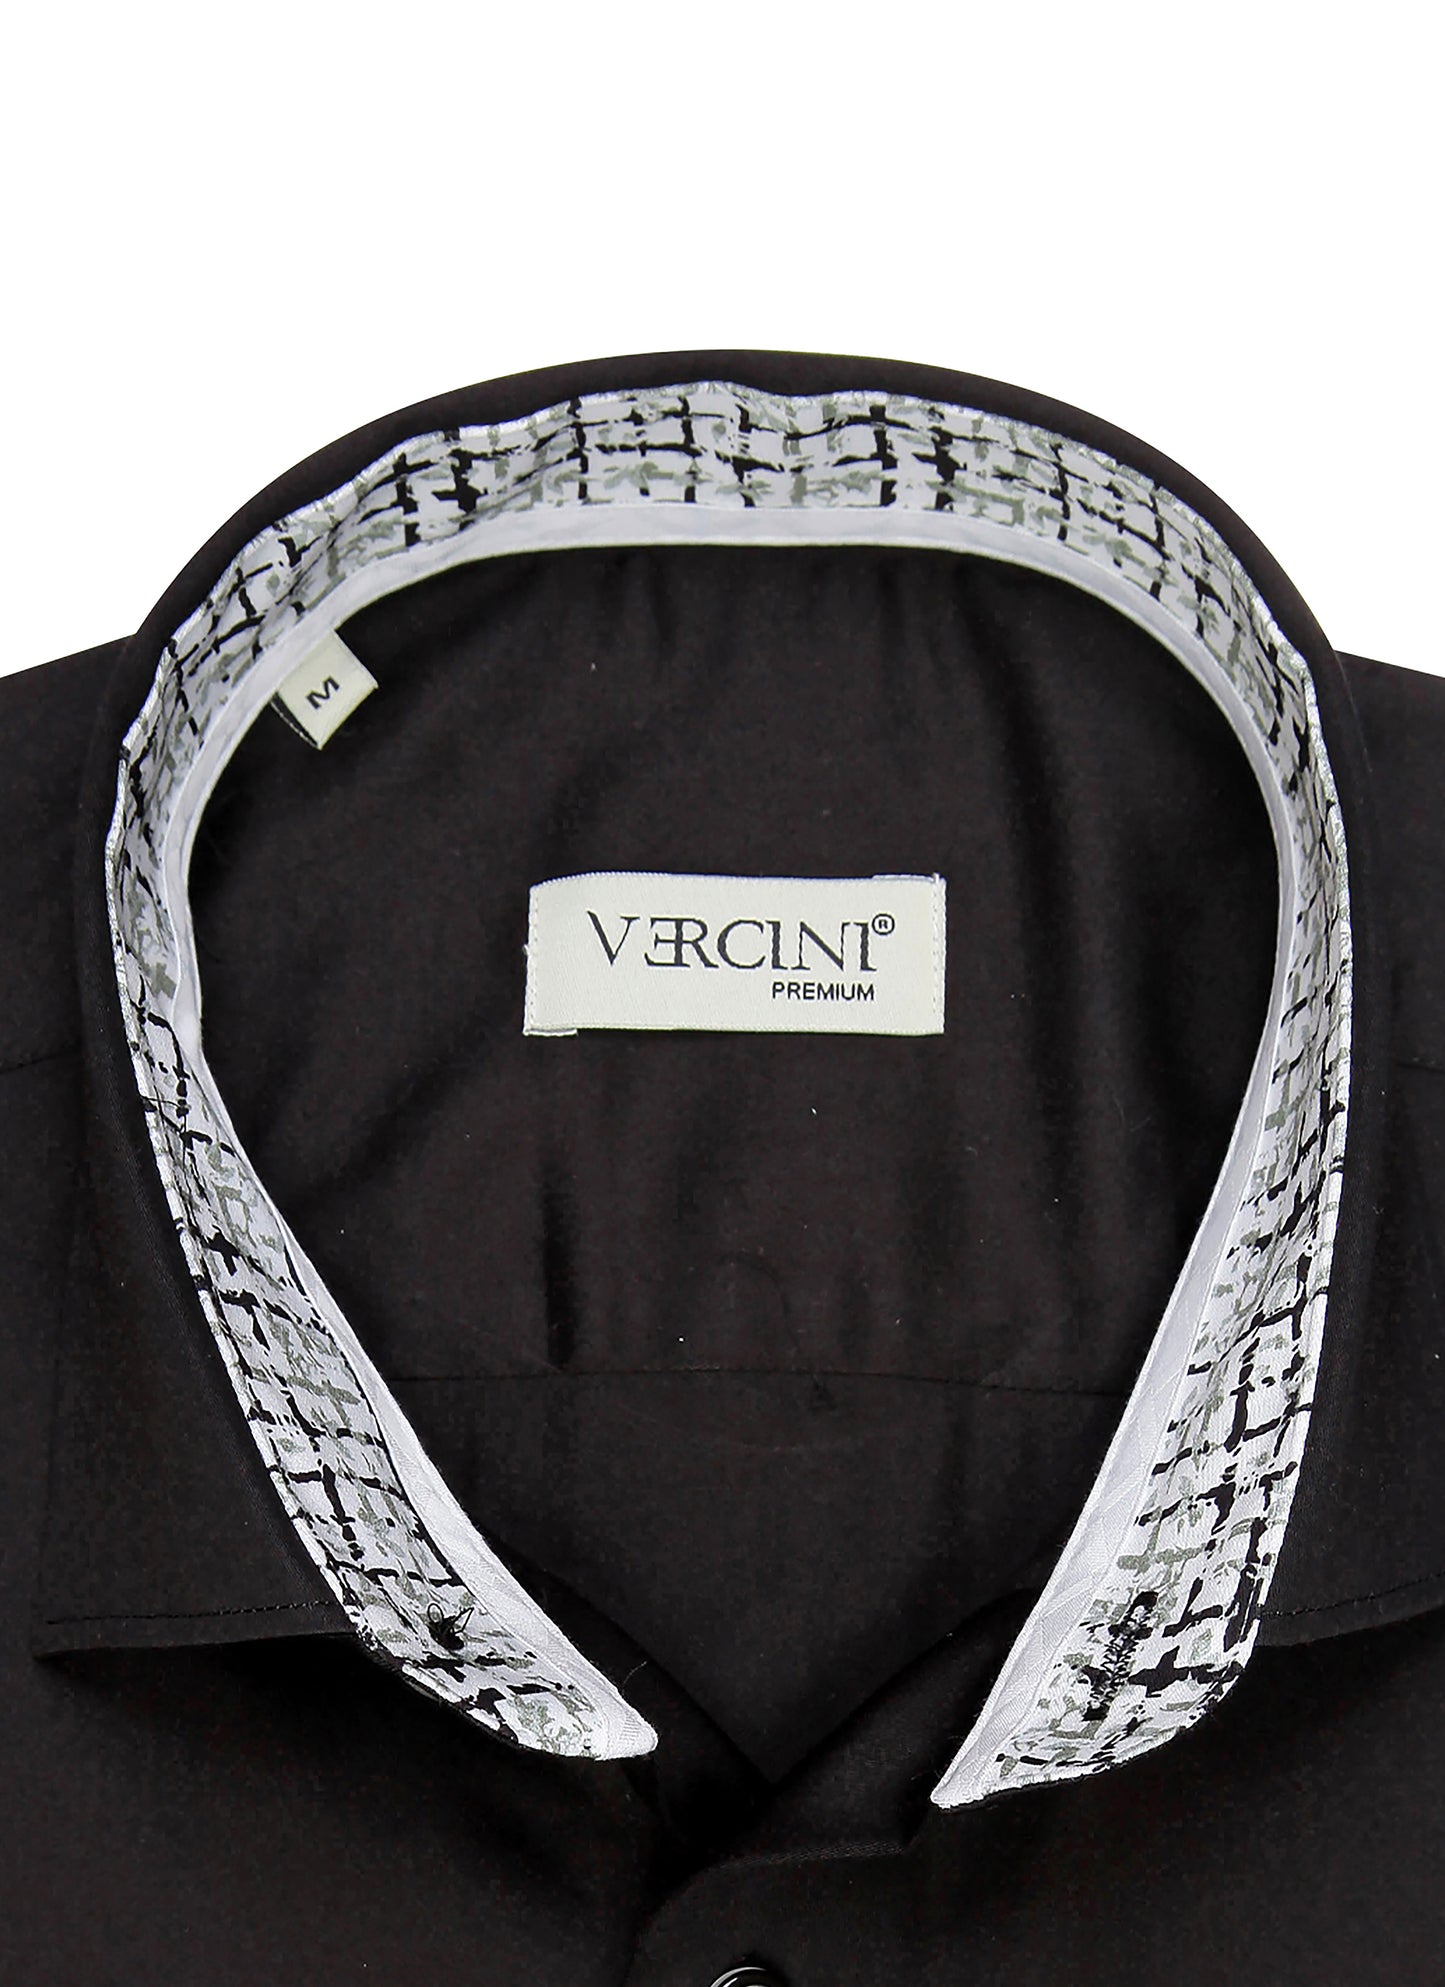 Monochrome Mosaic Prestige Men's Black Dress Shirt